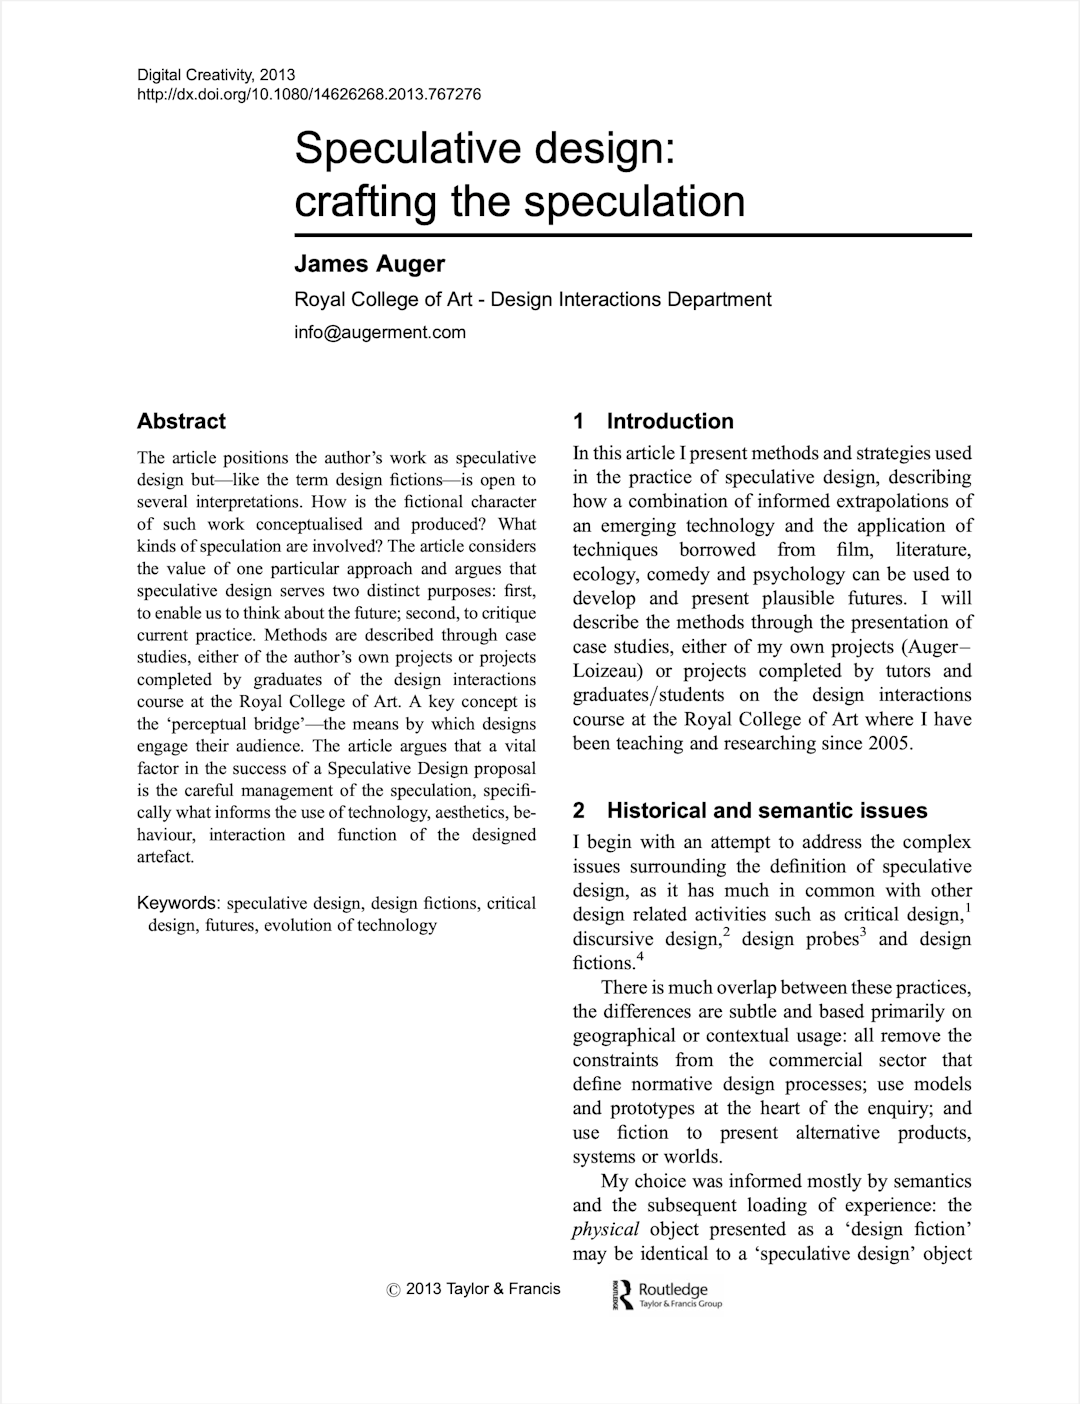 Speculative Design: Crafting the Speculation